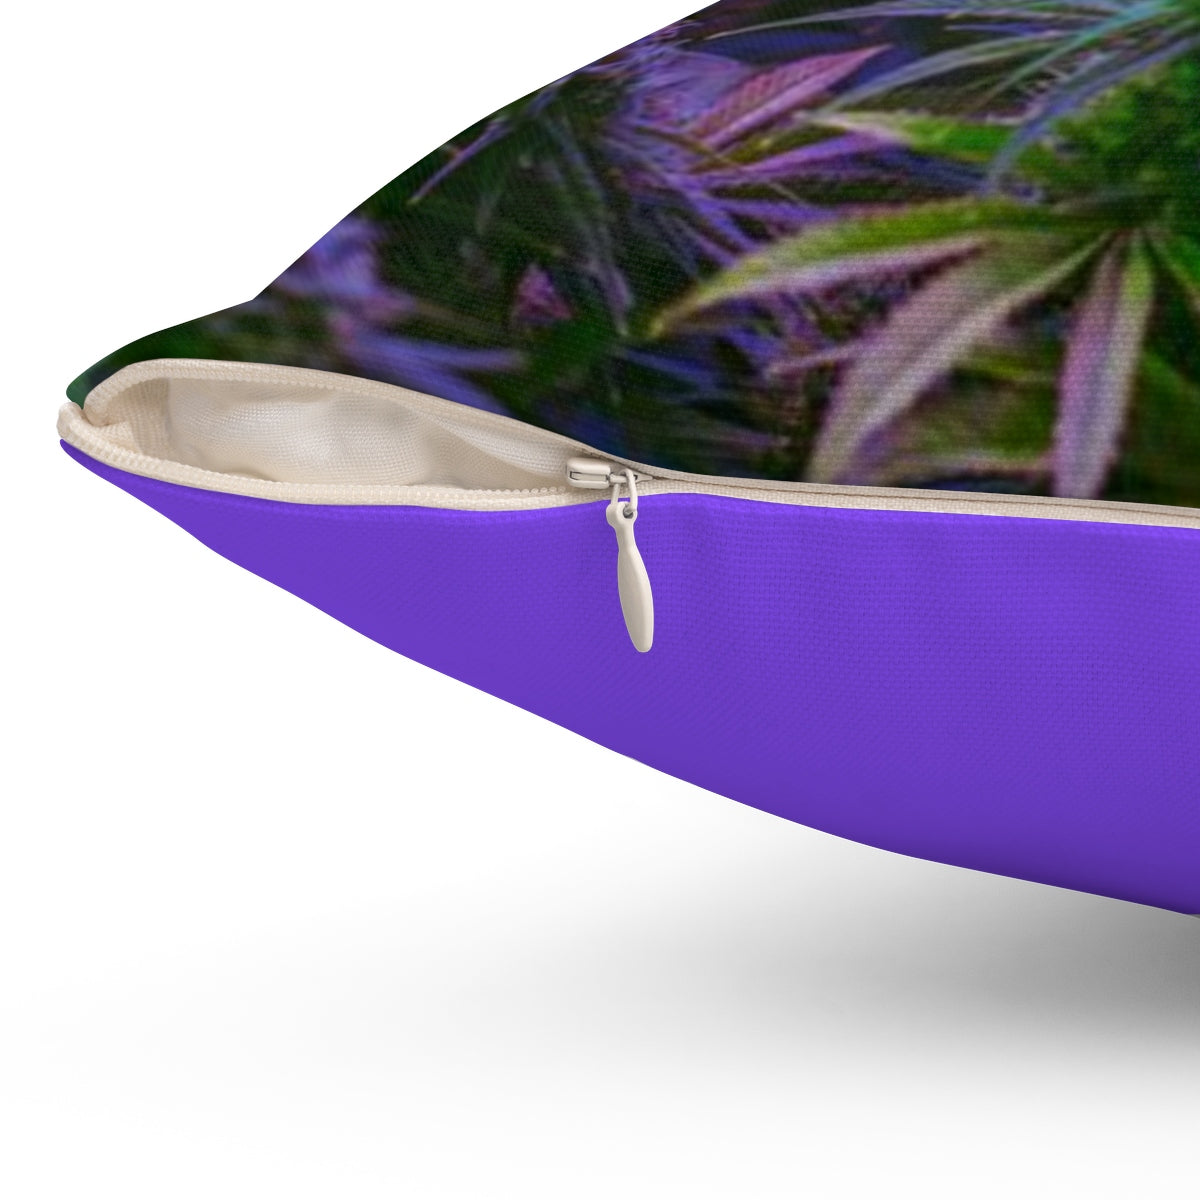 The Purple Cannabis Spun Polyester Square Pillow- Blue